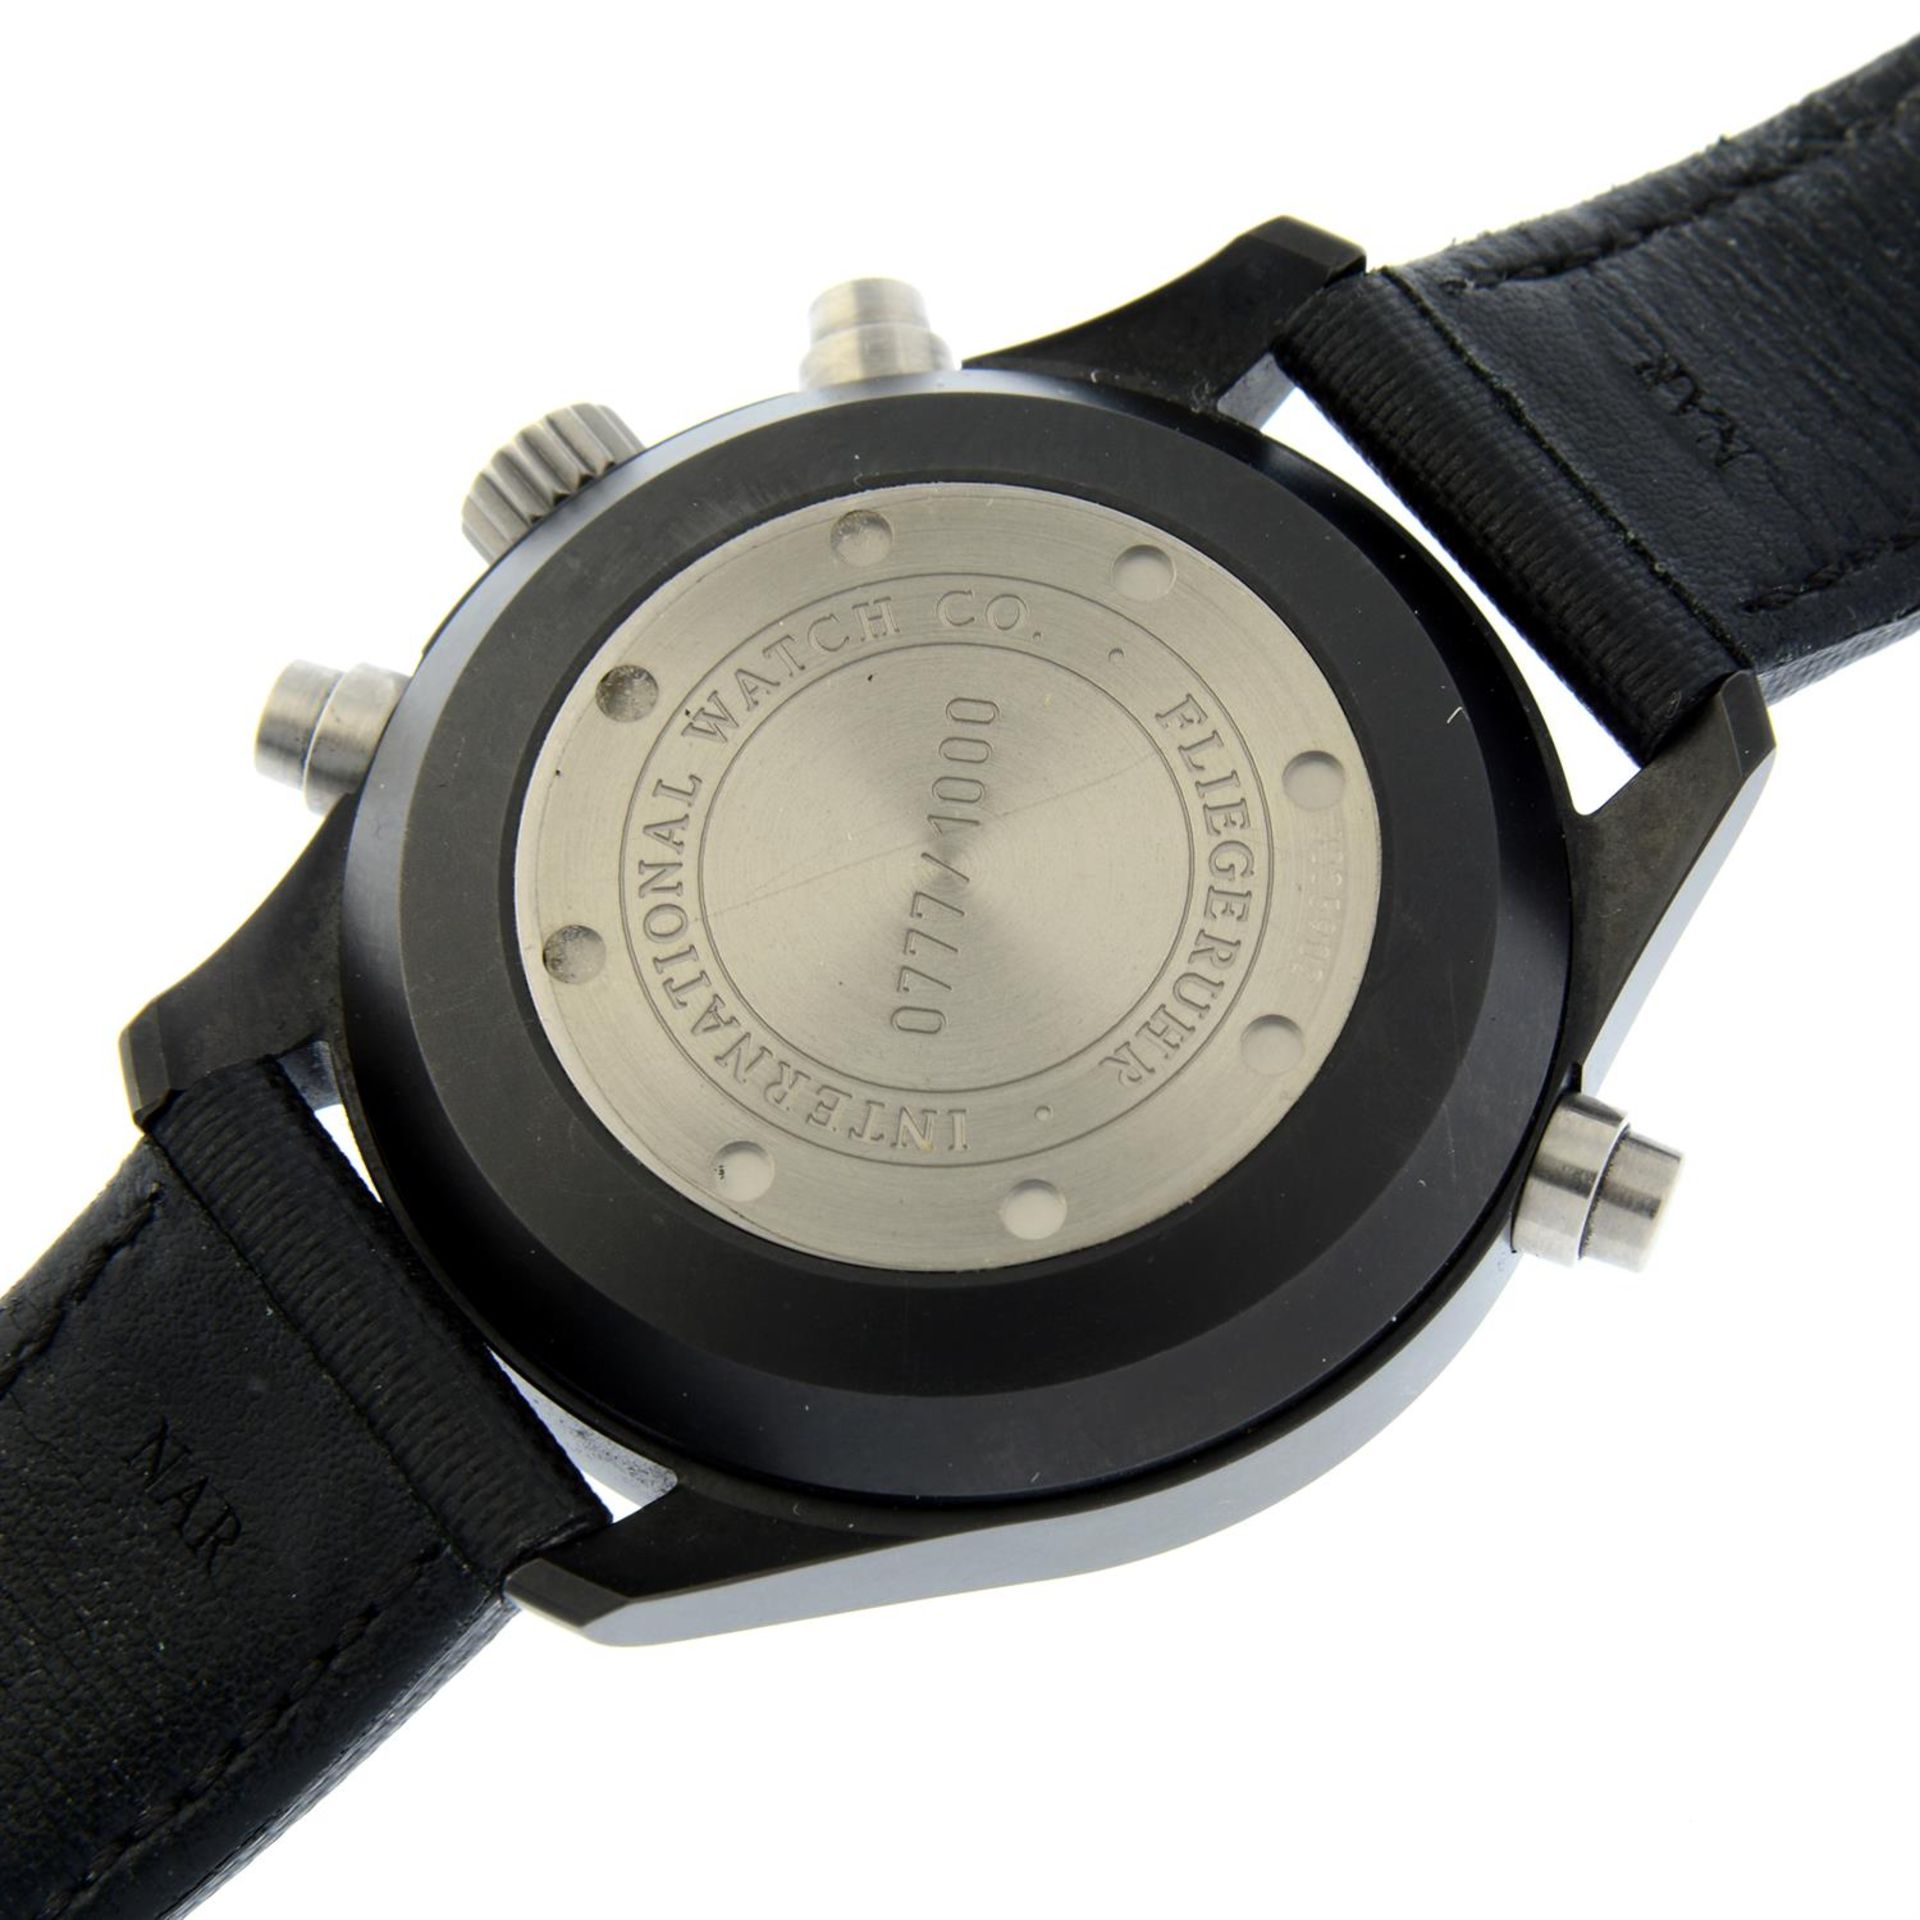 IWC - a ceramic Big Pilot Double Chronograph wrist watch, 44mm. - Image 5 of 6